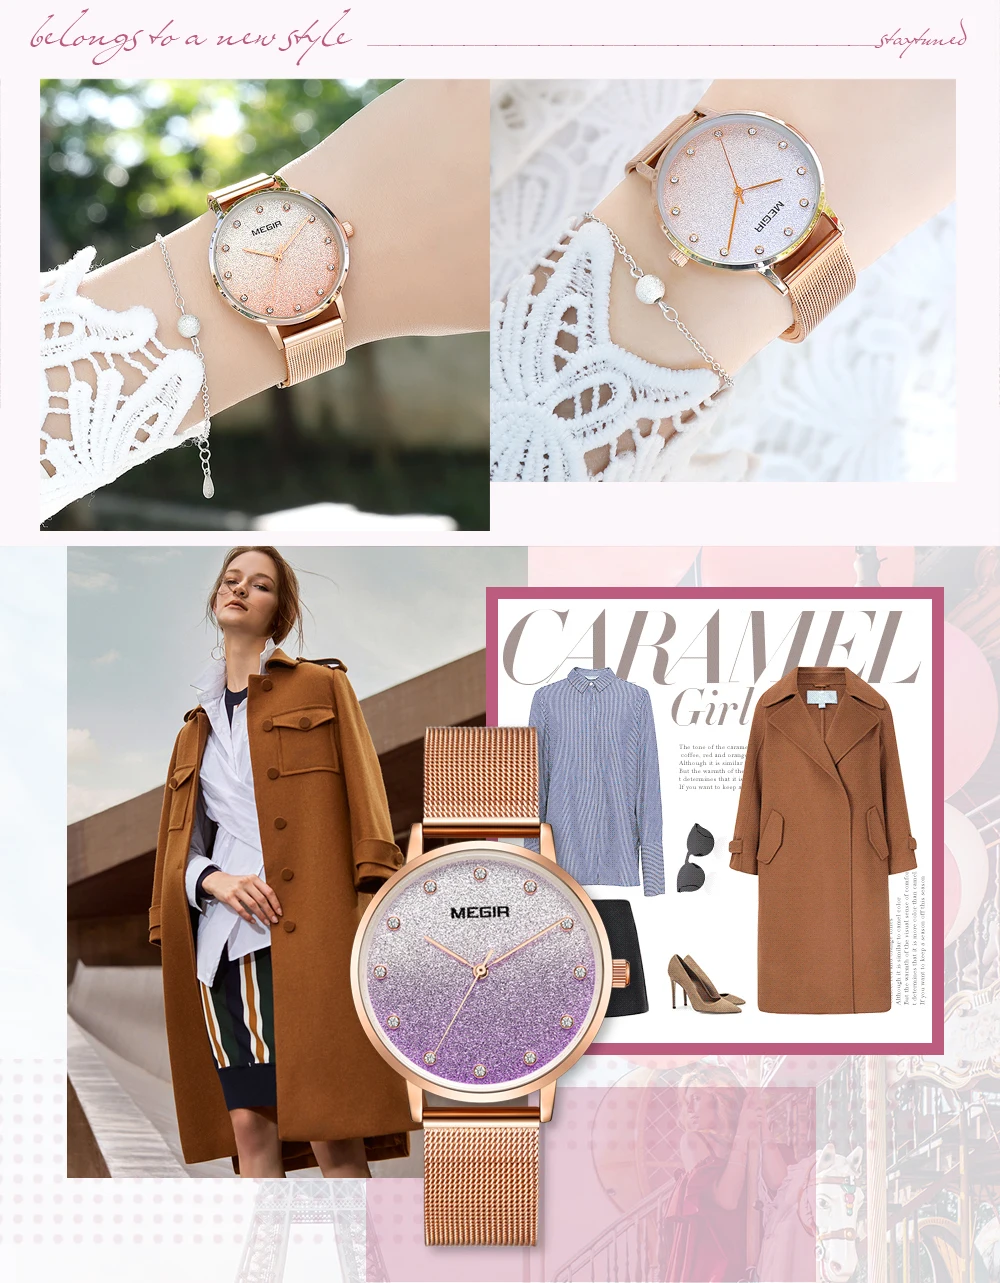 MEGIR Fashion Dress Women Watch Quartz Clock Crystal Decoration RG Mesh Strap Urban Modern Ladies Top Brand Luxury Wristwatches | Наручные